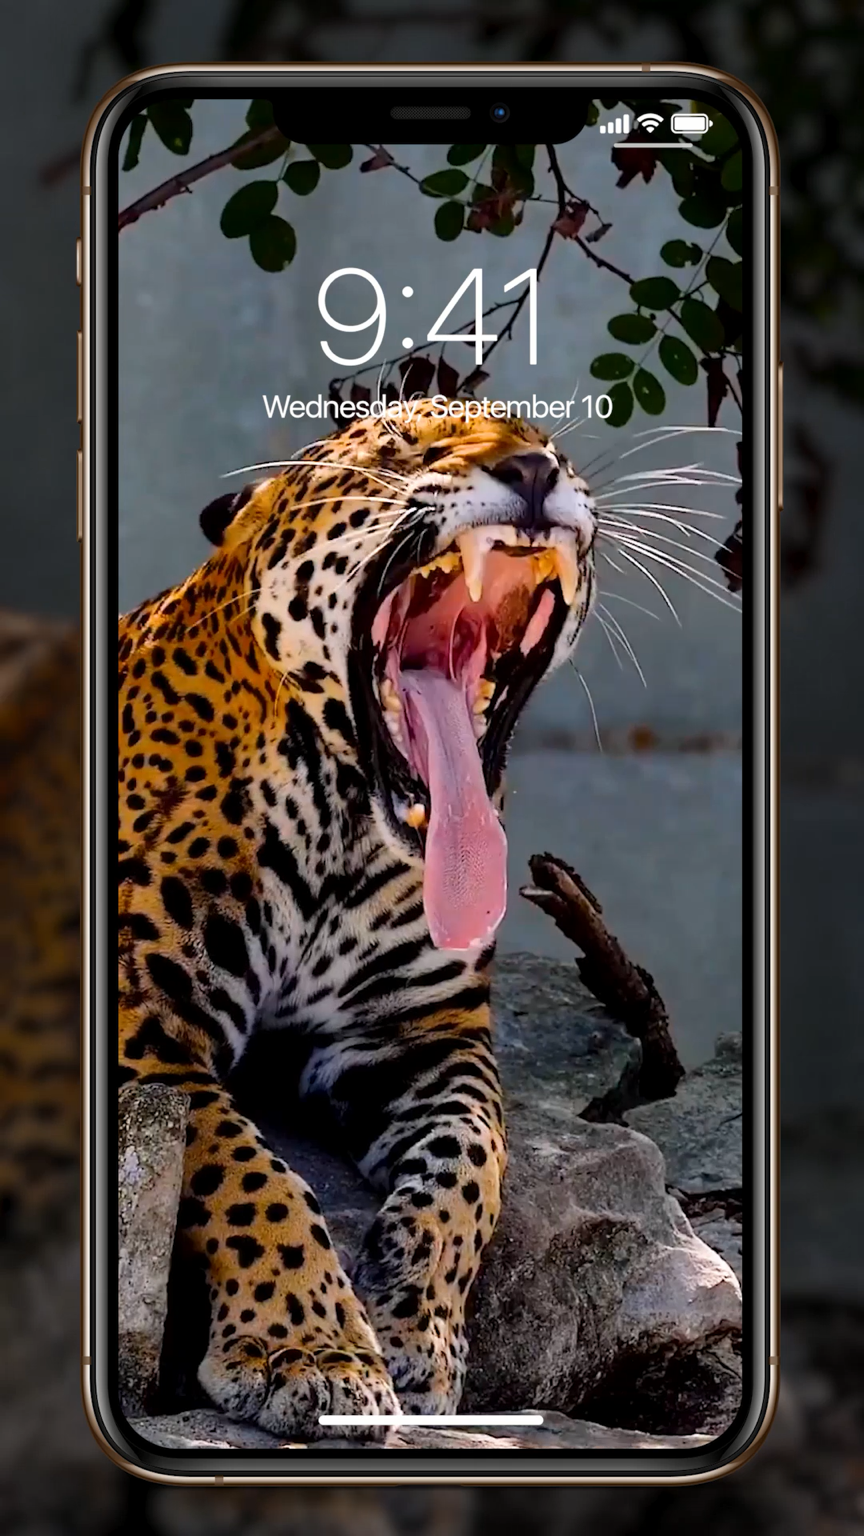 Iphone Live Wallpaper Animal - 864x1536 Wallpaper 